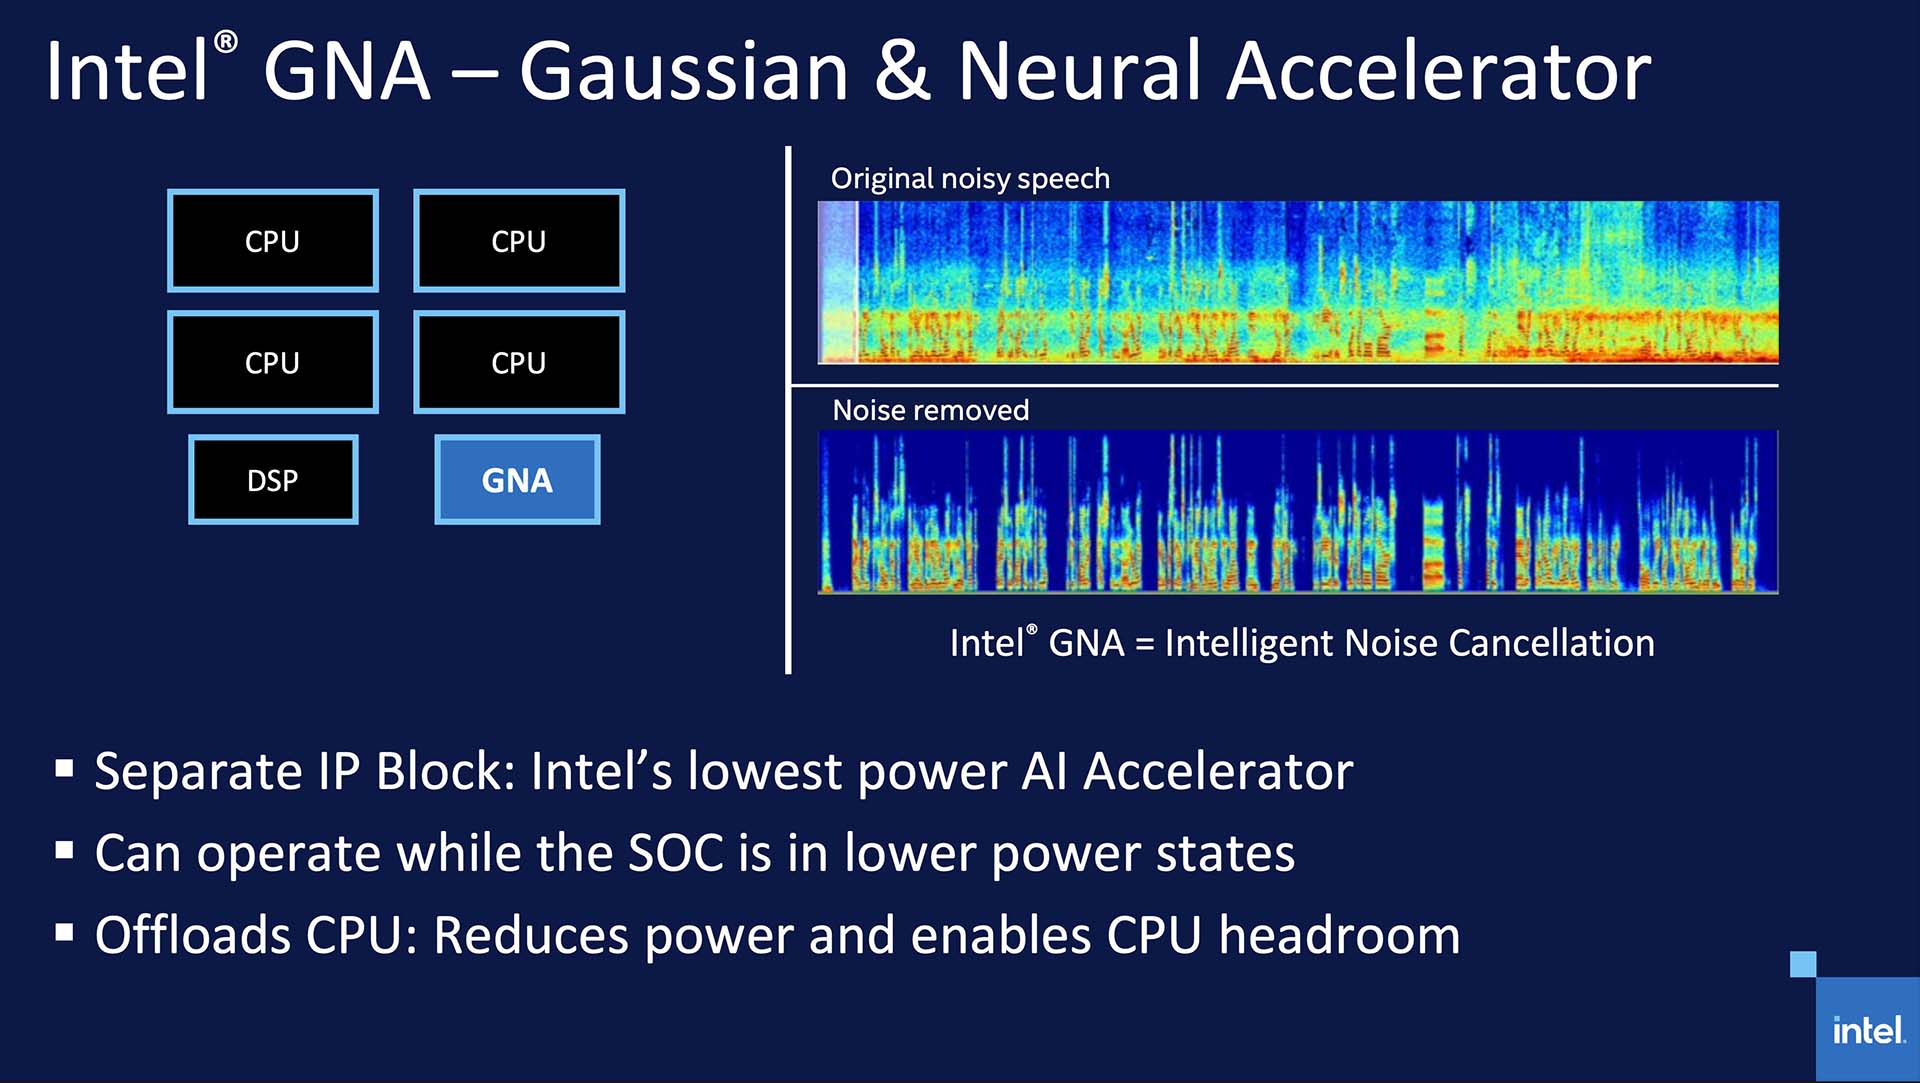 Intel Gaussian & Neural Accelerator